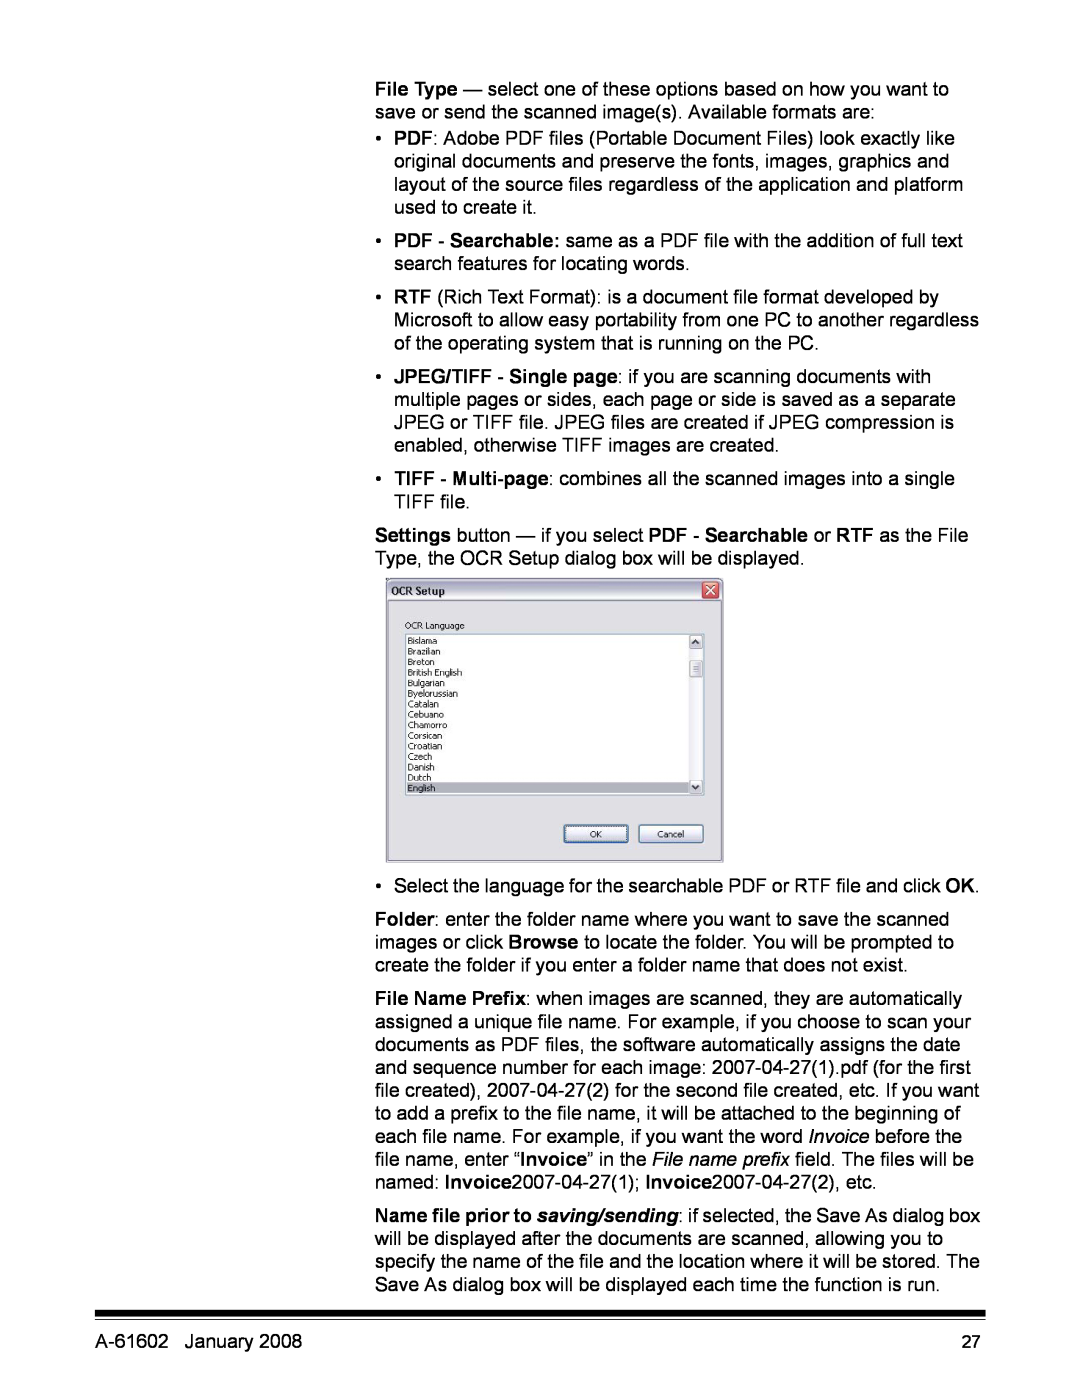 Kodak manual Settings button - if you select PDF - Searchable or RTF as the File, A-61602 January 